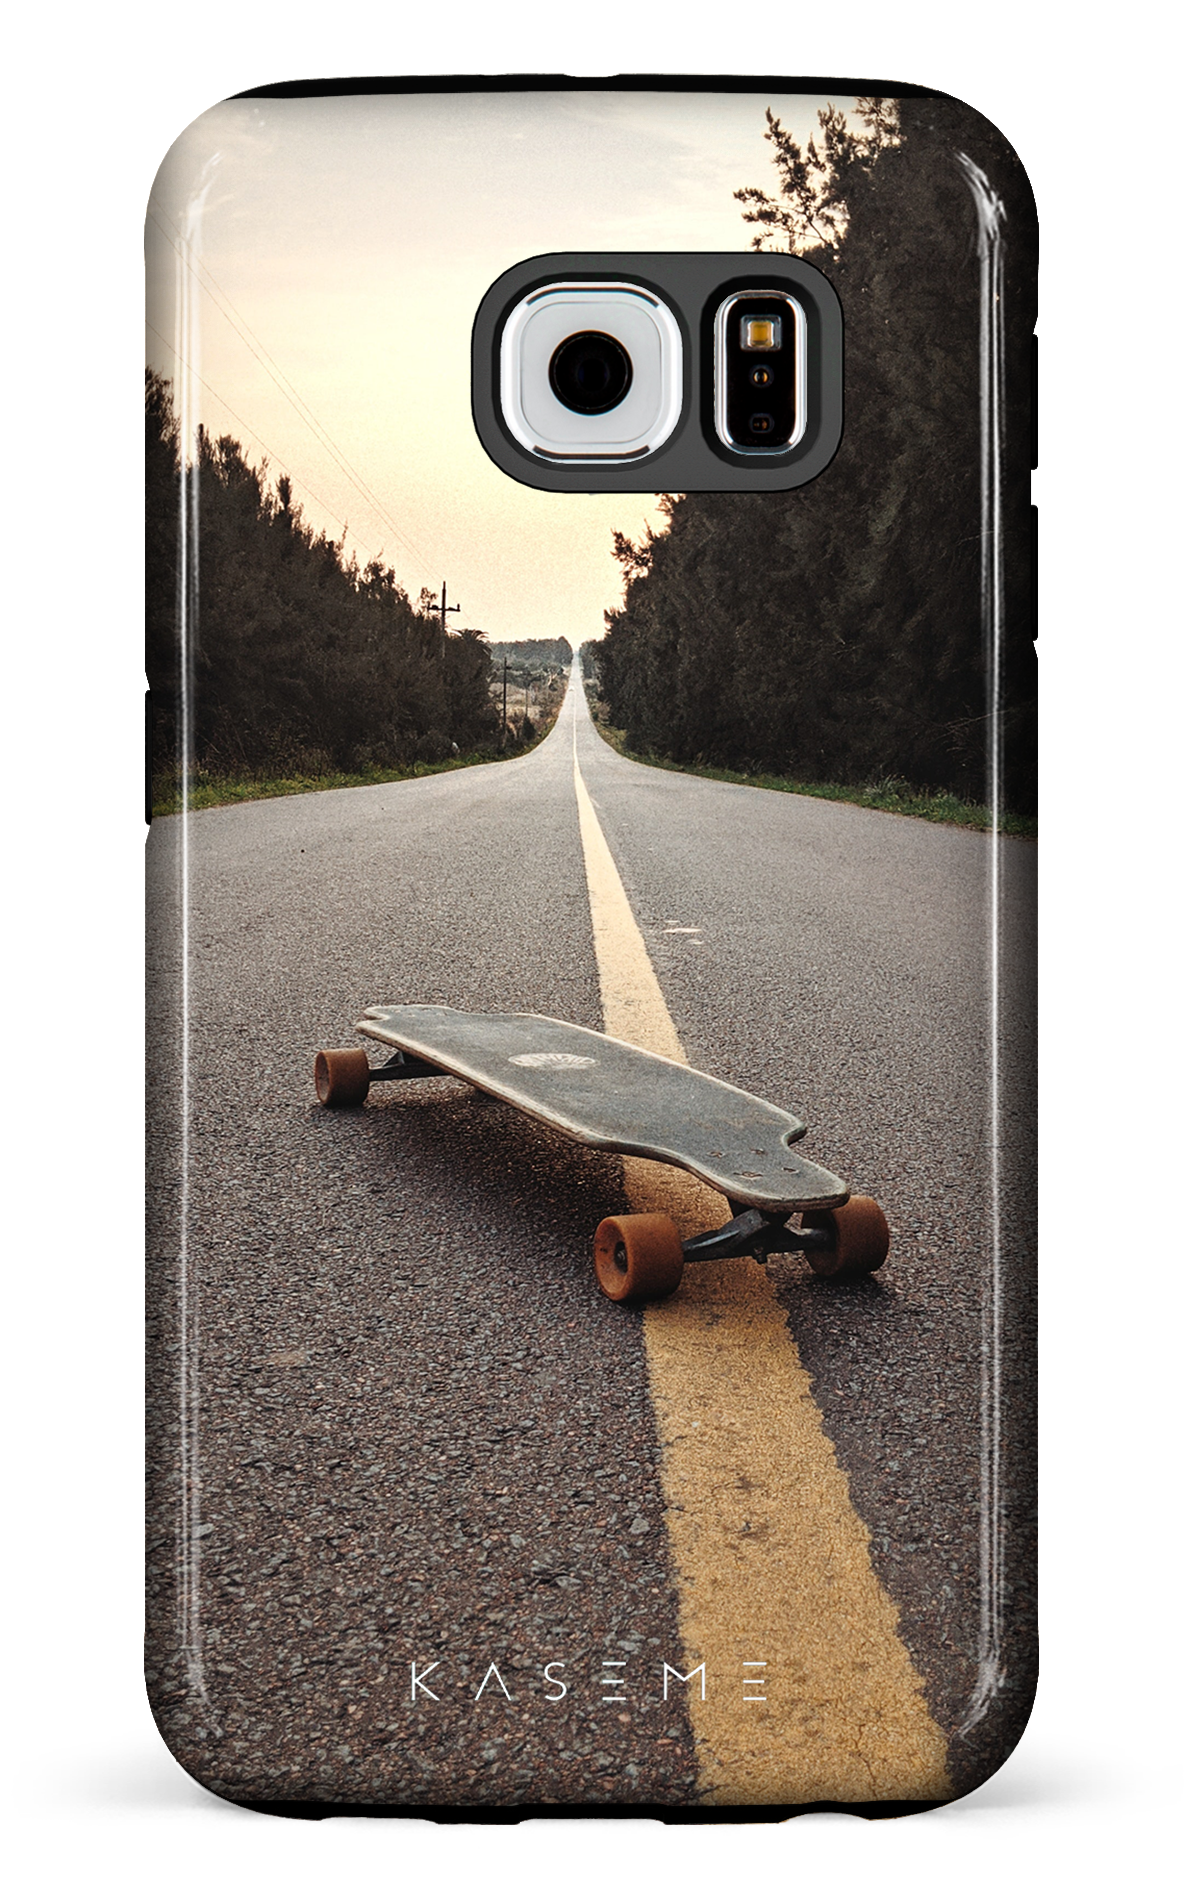 Downhill - Galaxy S6